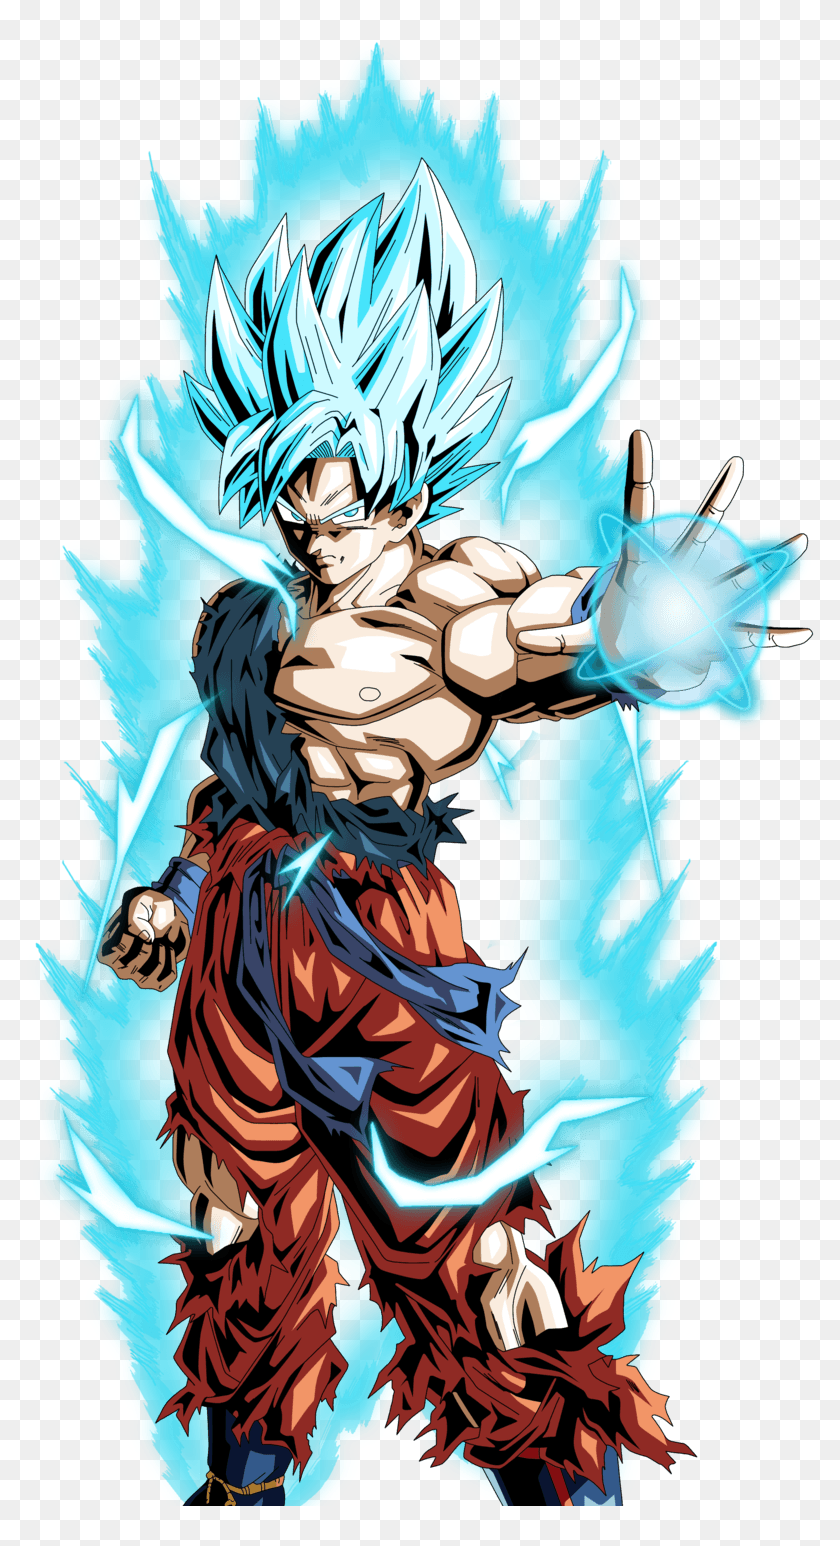 Goku Super Saiyan God Blue Wallpapers Android क लए APK डउनलड कर